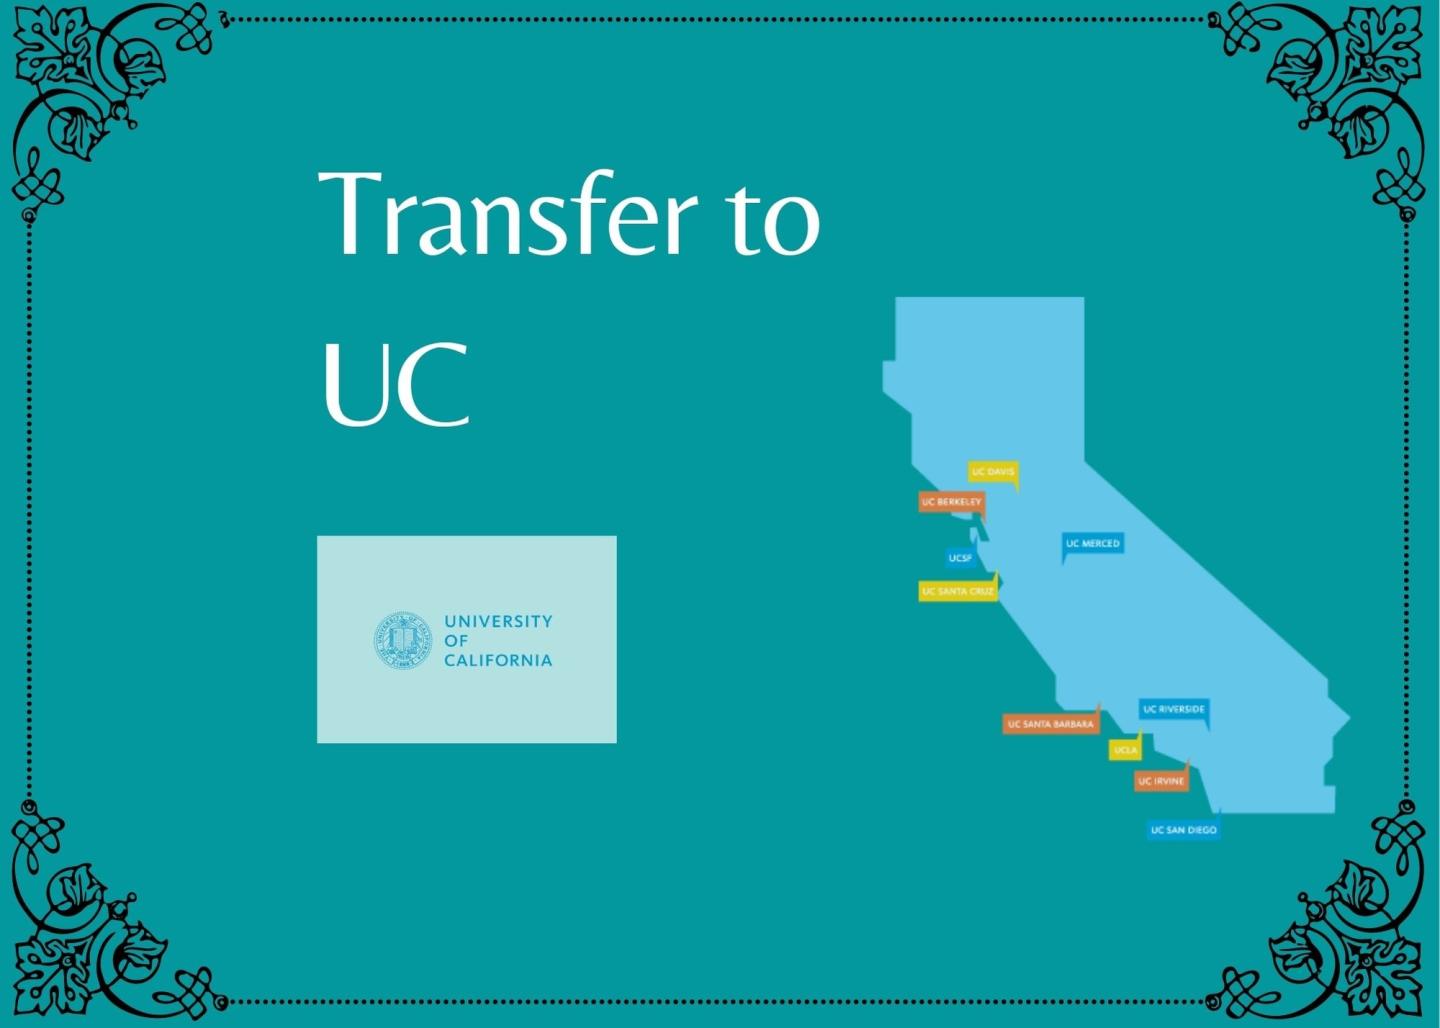 Transfer to University of California